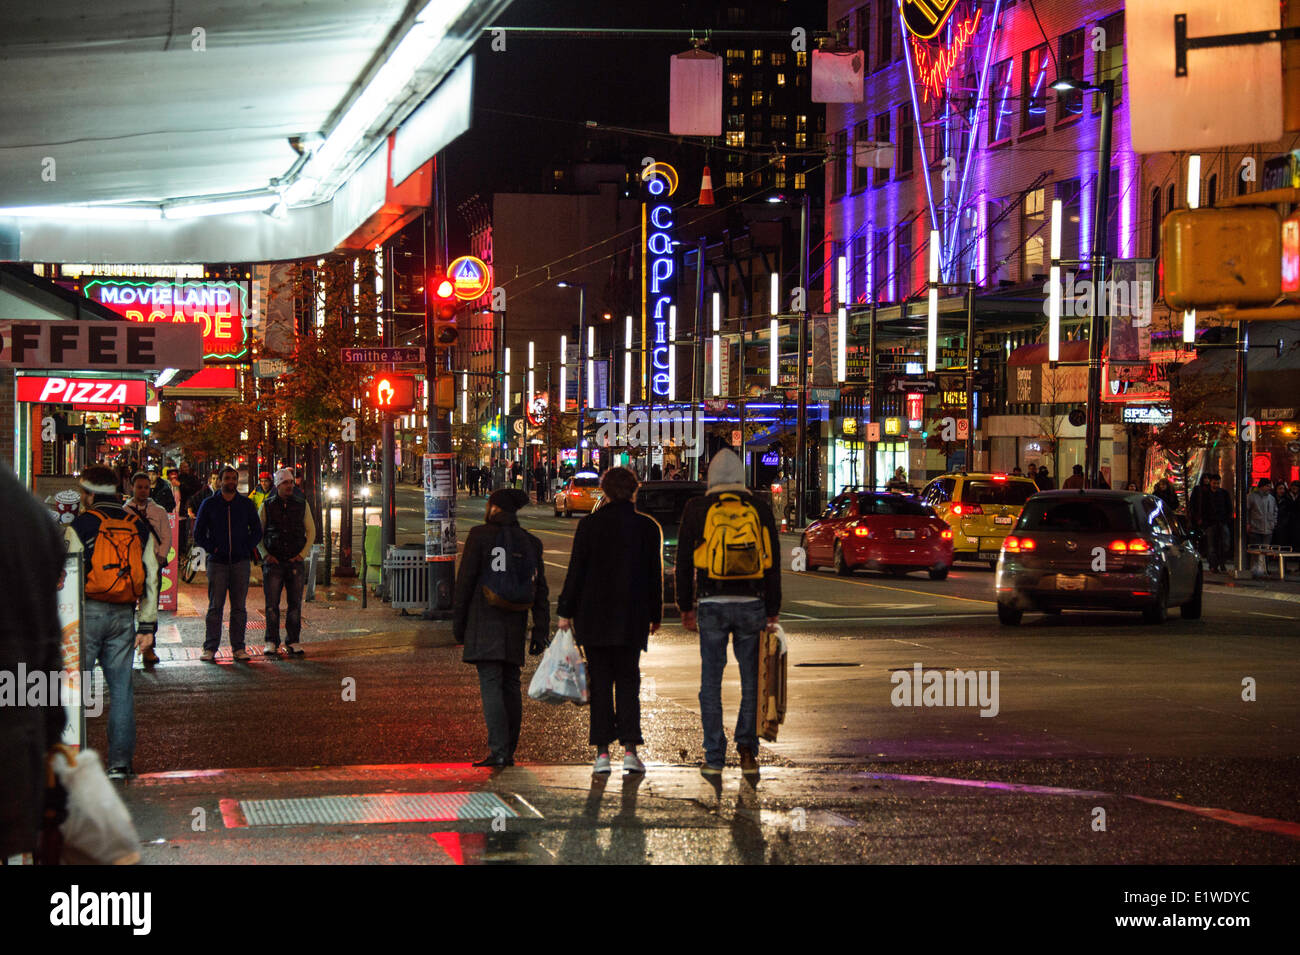 Pedestrians walking down Granville street, Vancouver, British Columbia, Canada Stock Photo